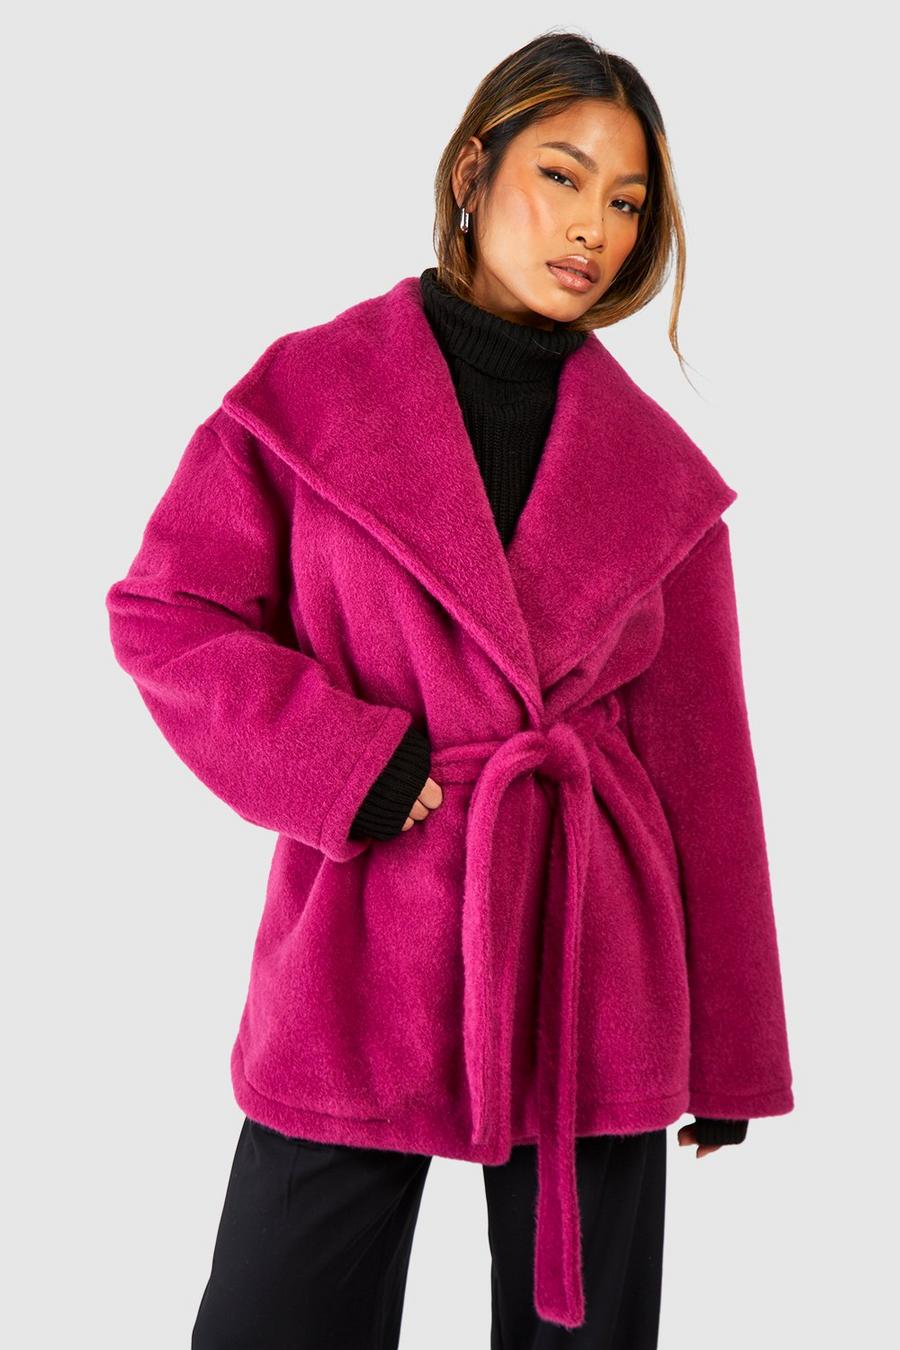 Women's Wool Coats